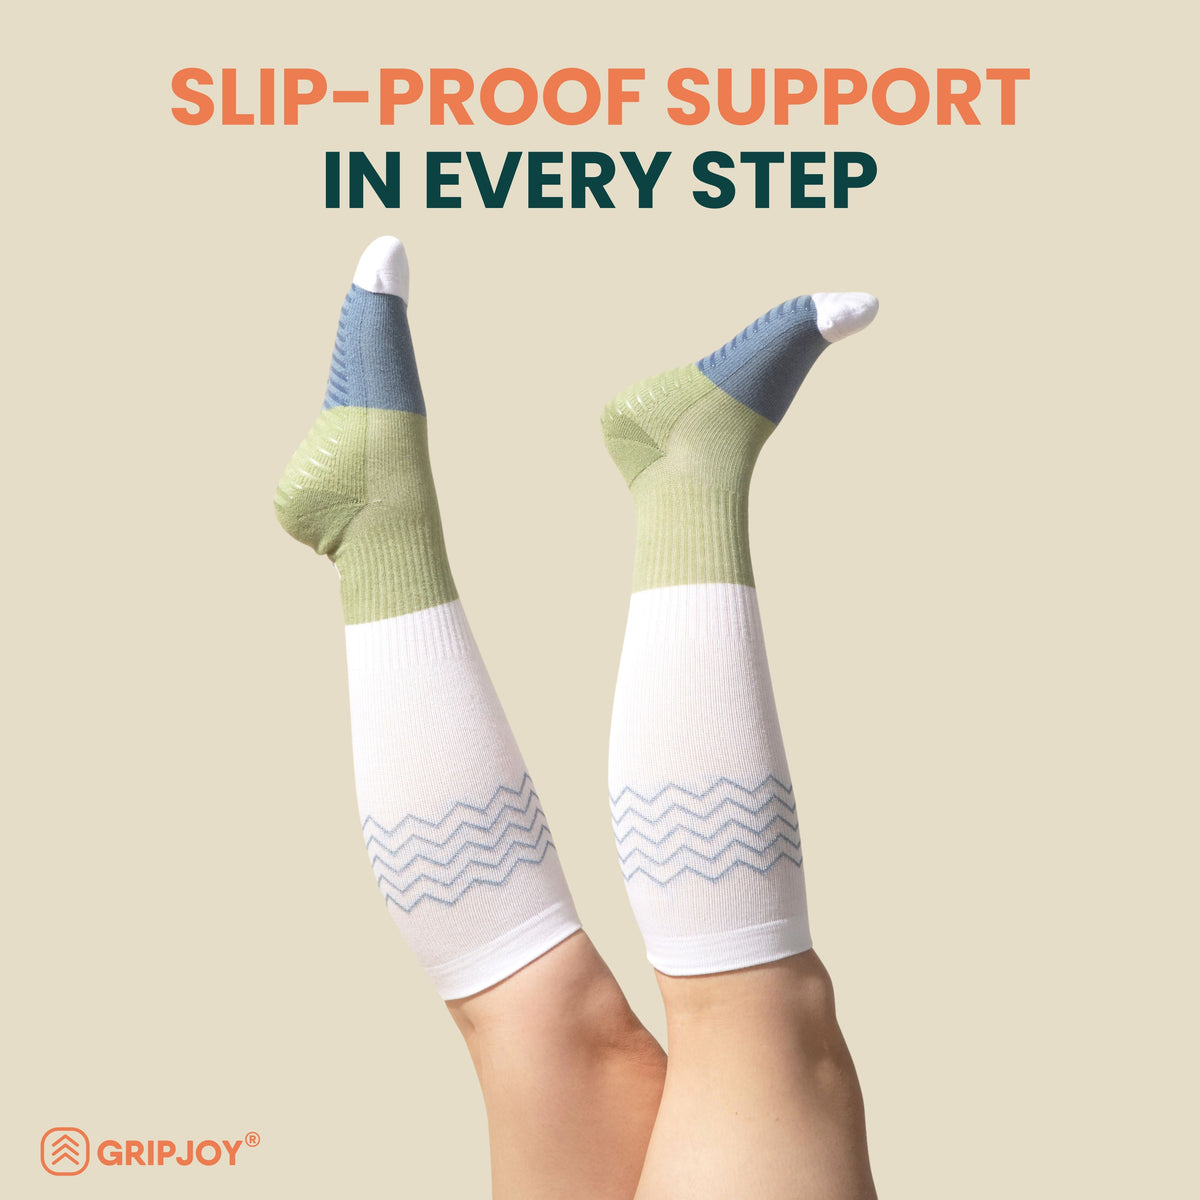 New Gripjoy Women's Compression Socks with Grips - Veg4U